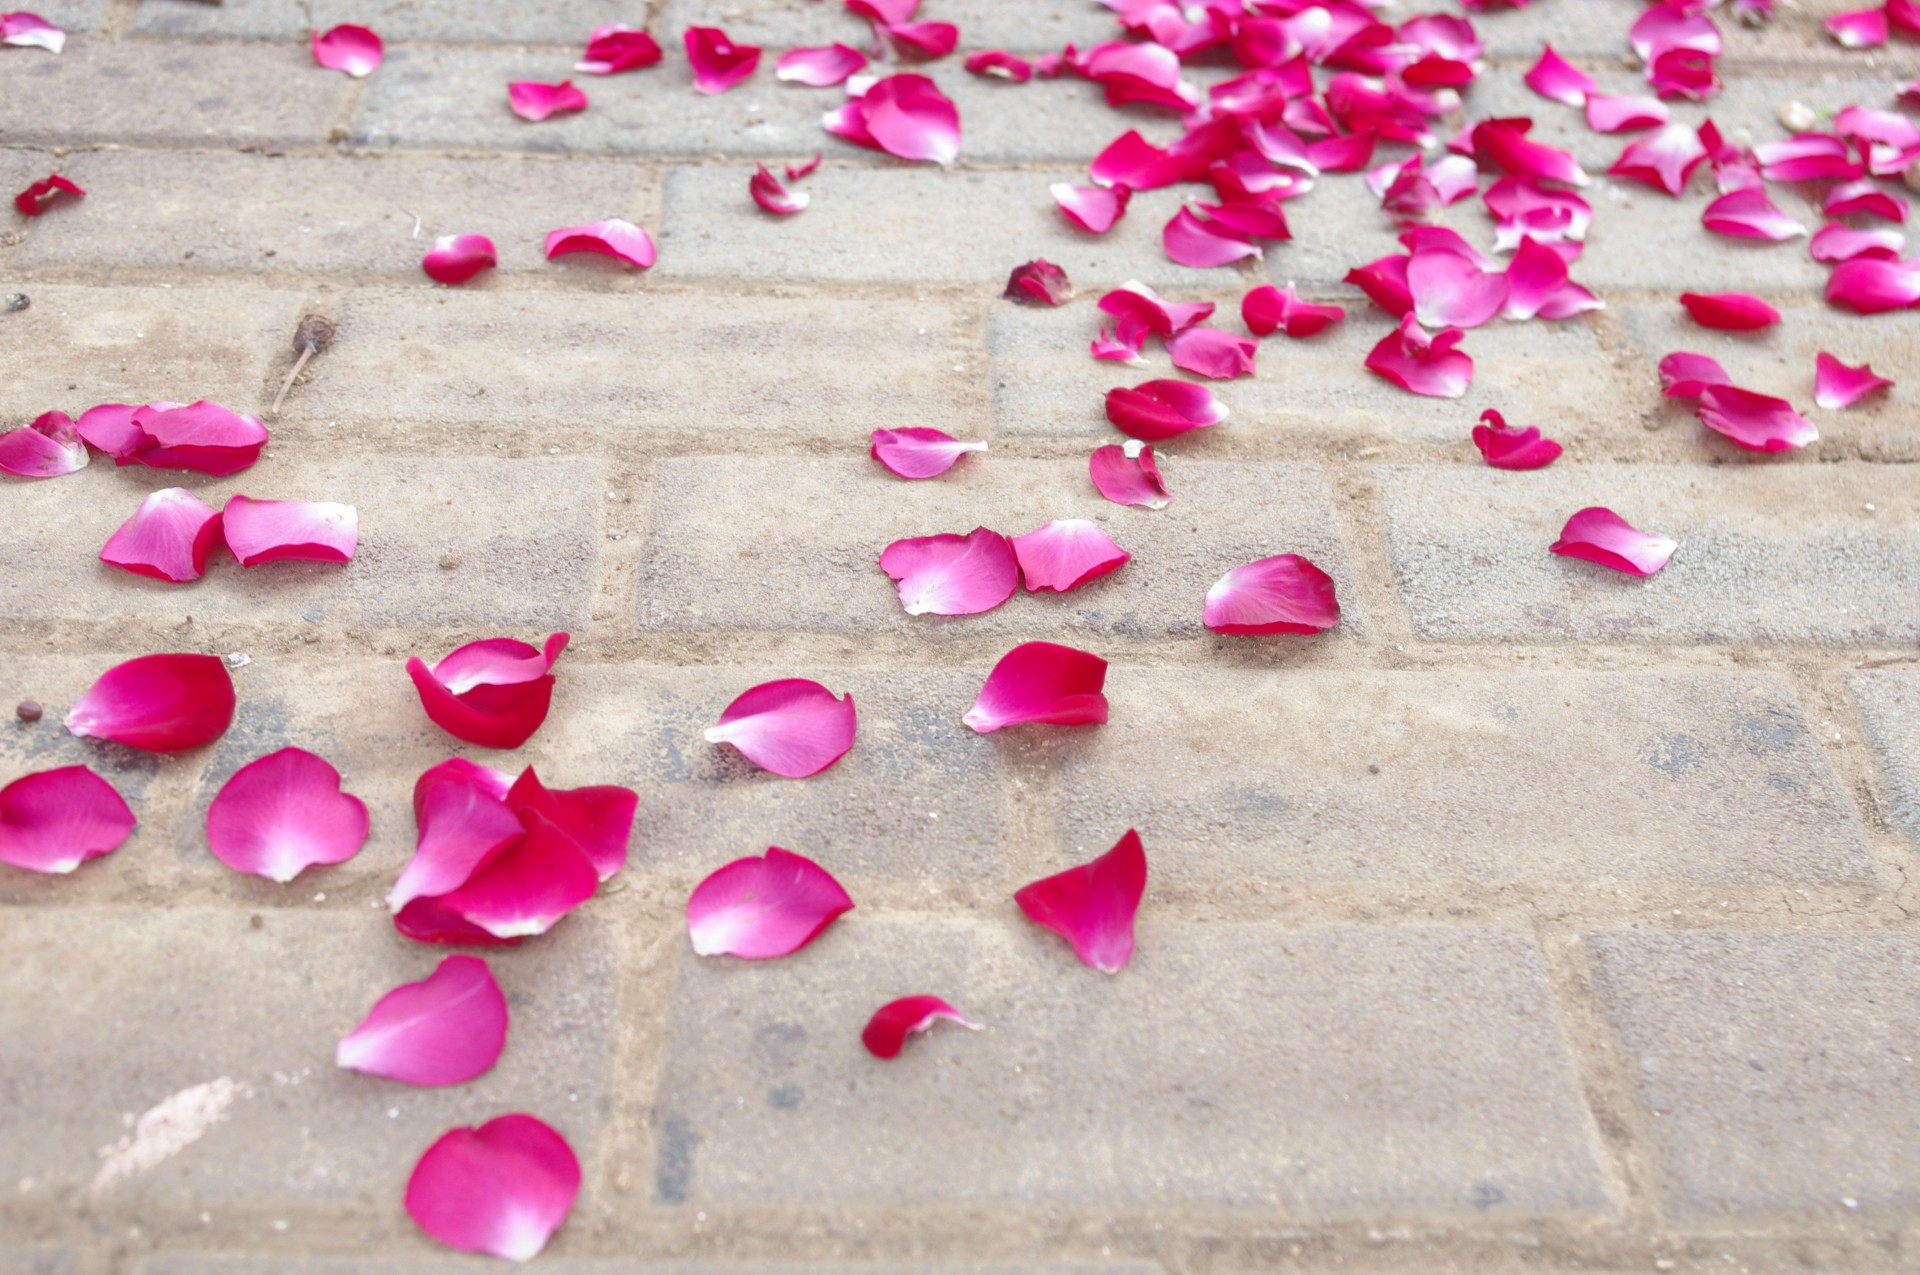 rose petals floor free photo